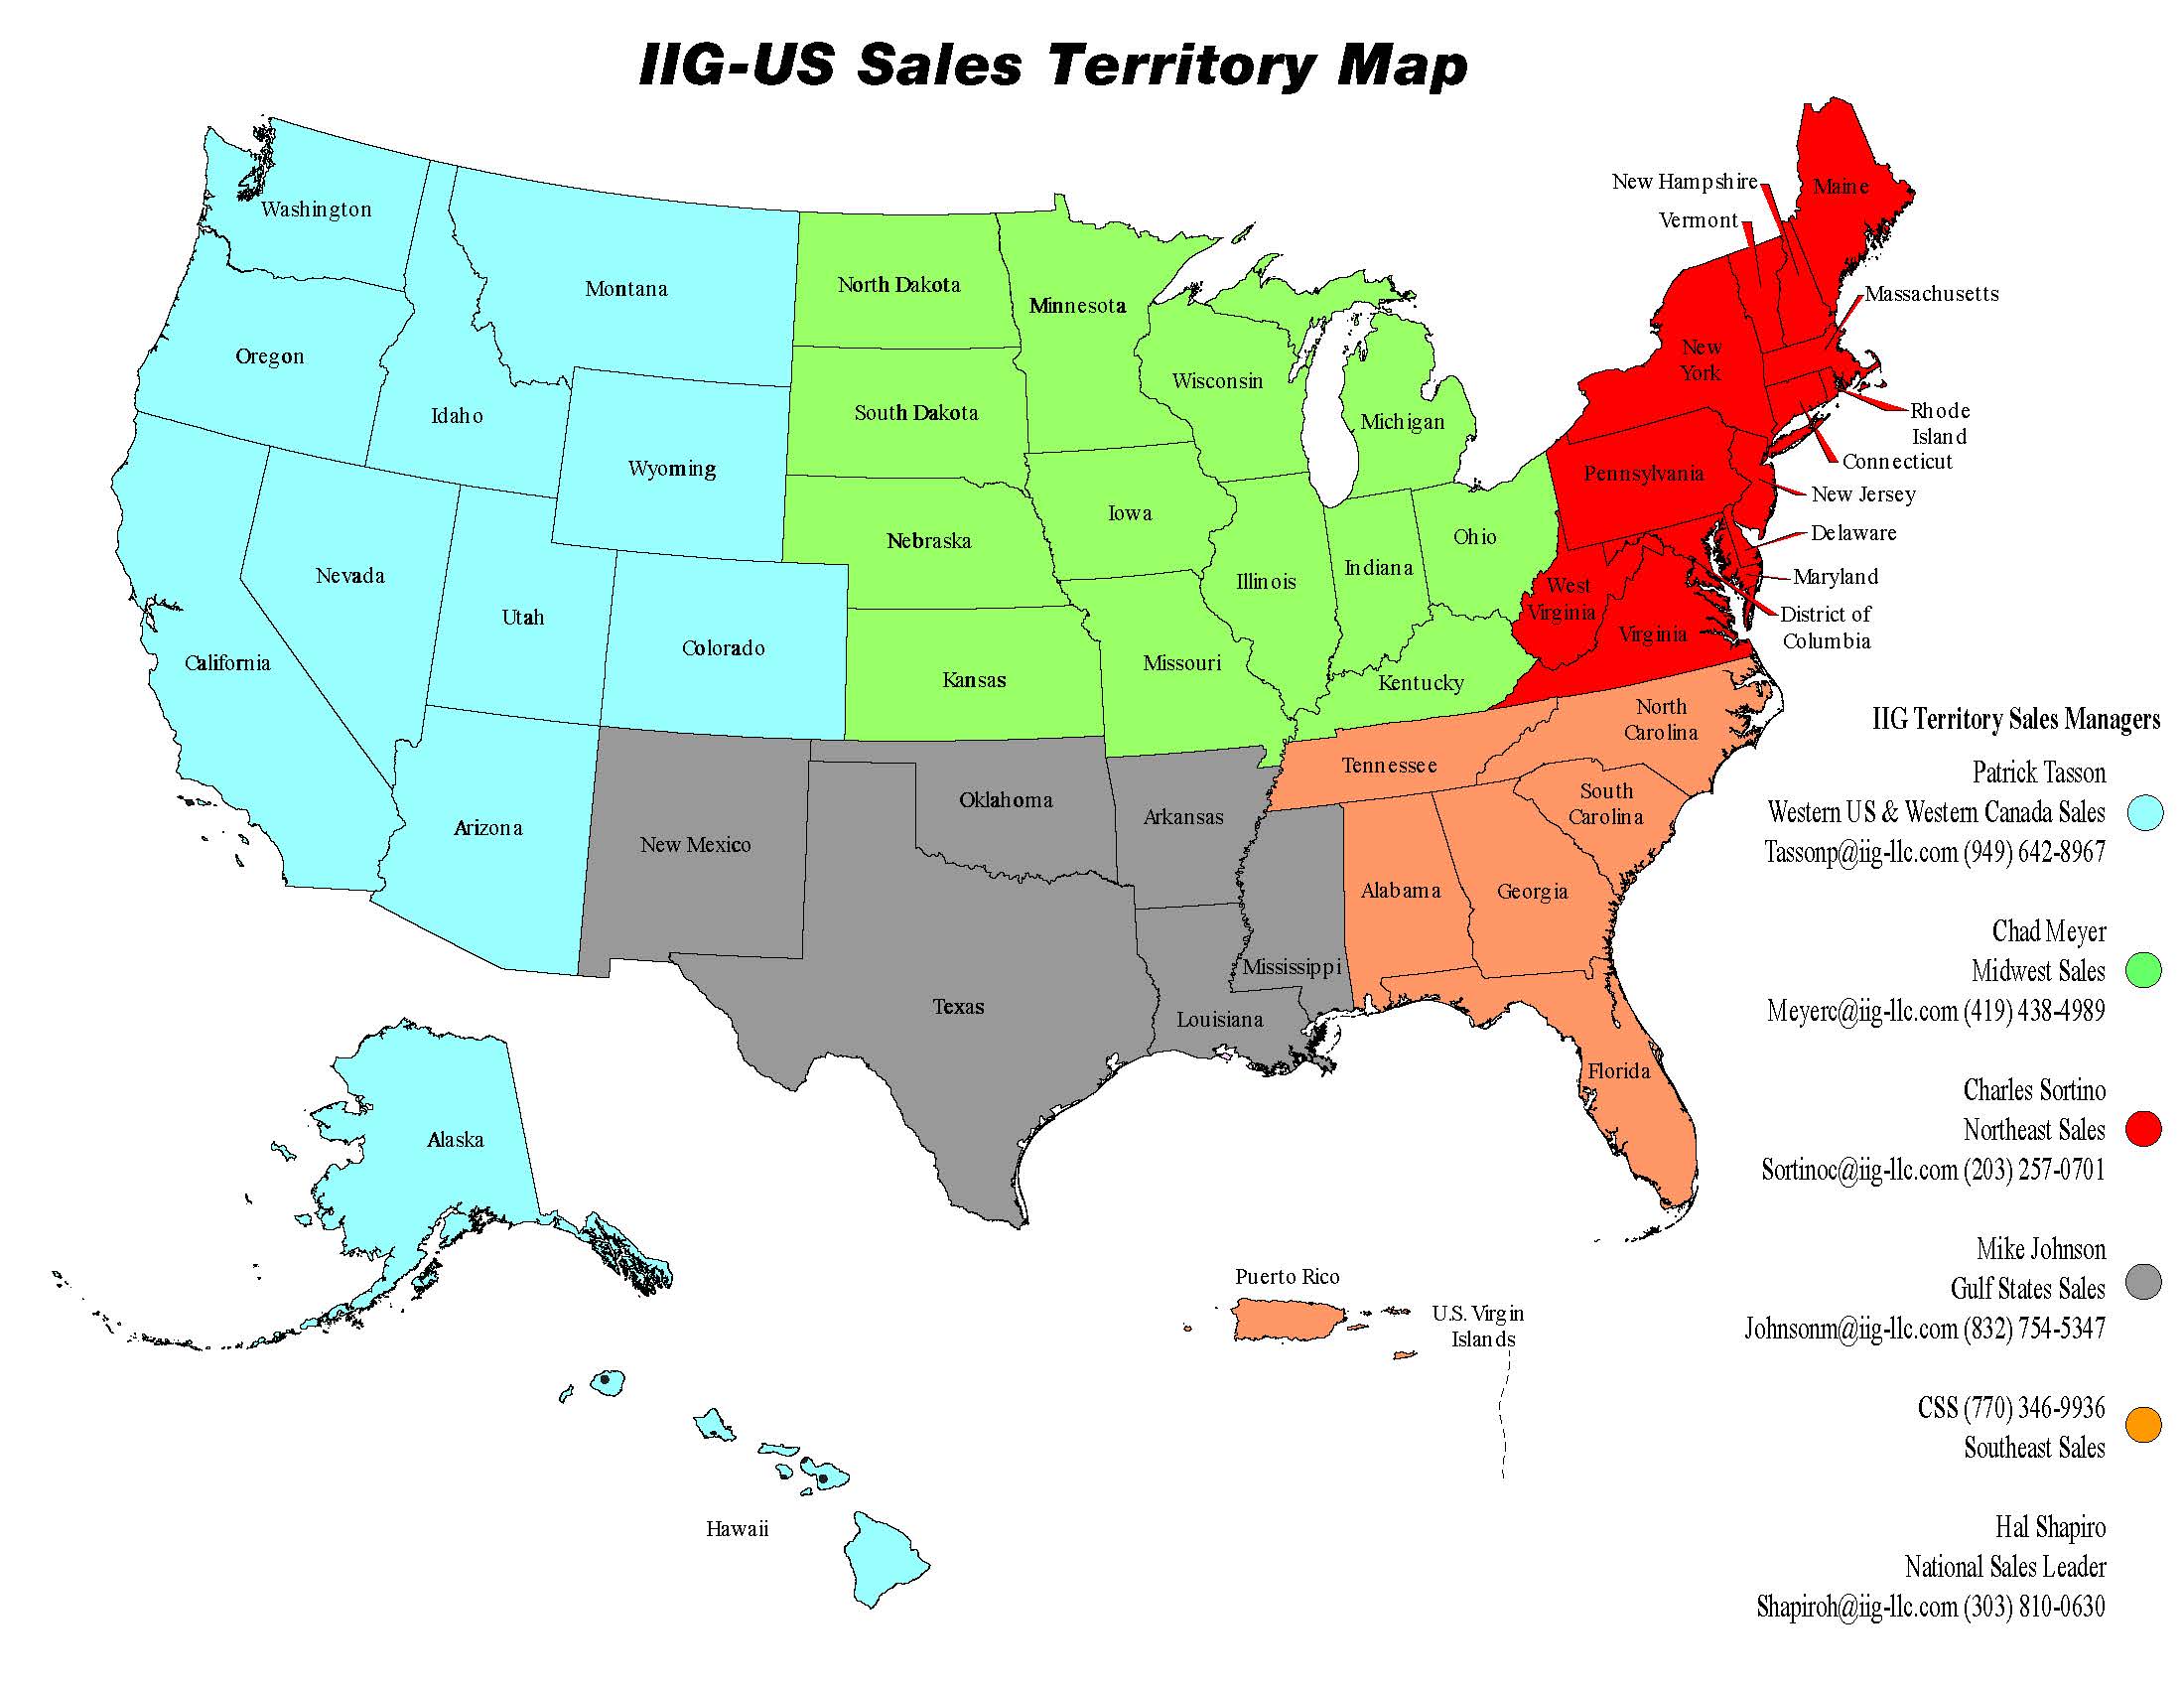 IIG Sales Territory Map US